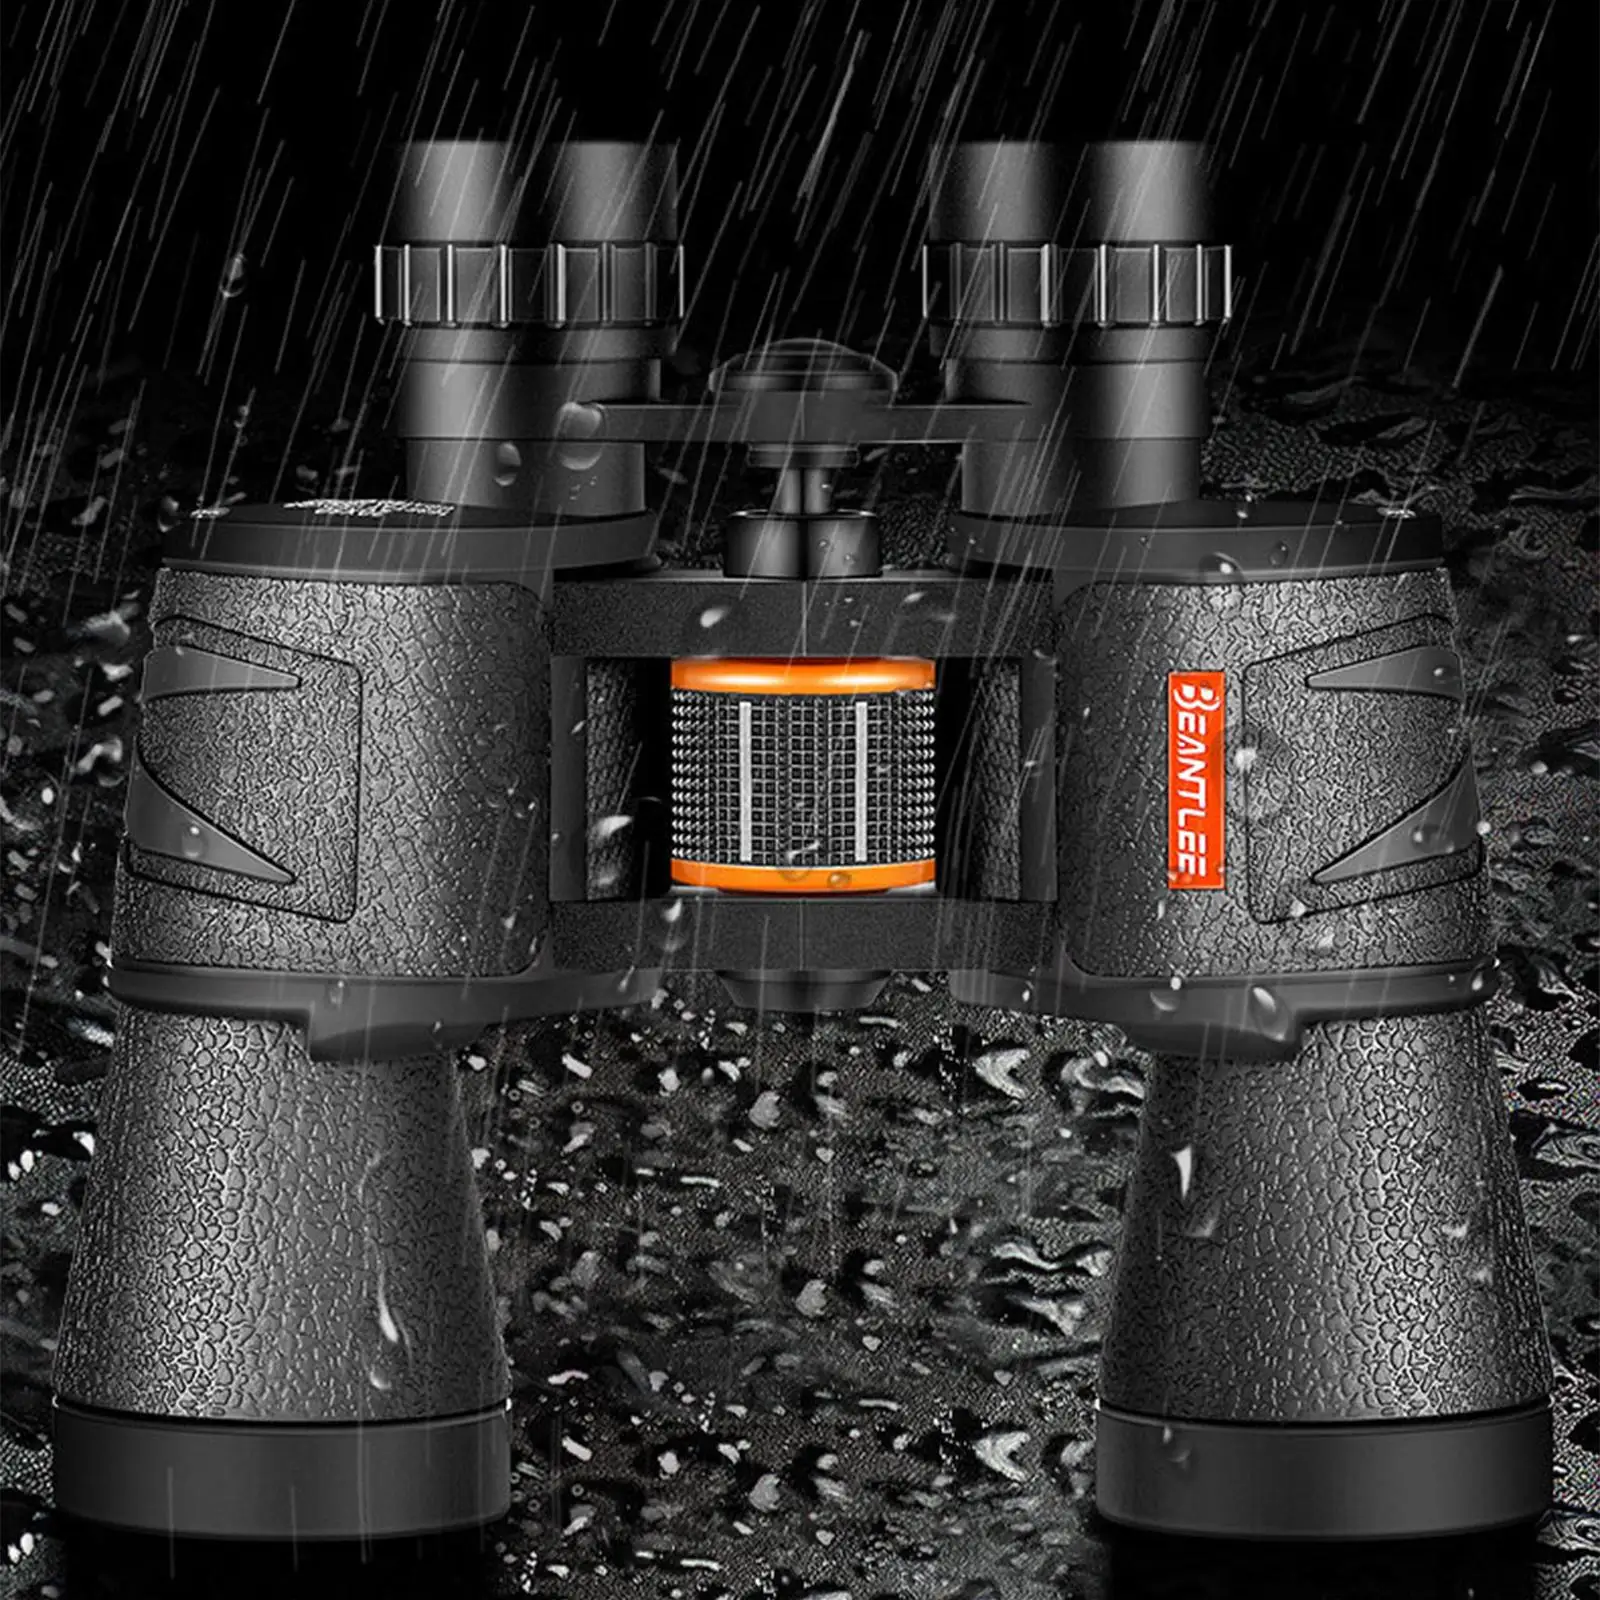 20x50 Binoculars for Adults Bak4  Fmc Lens HD for Bird Watching Travel